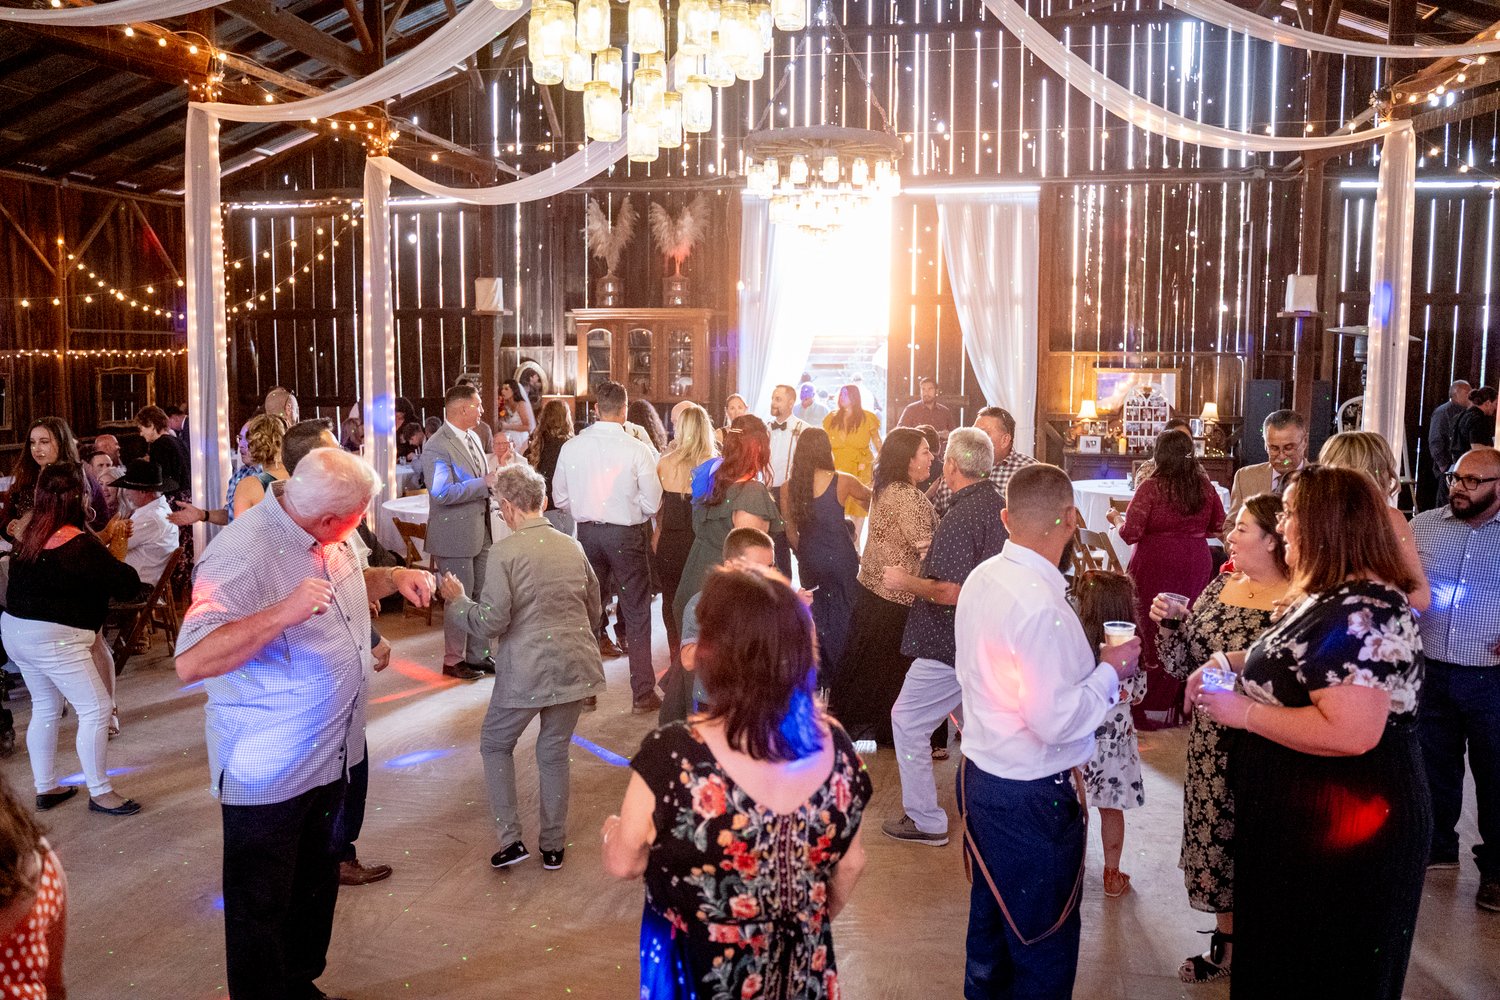 guests dancing at a wedding reception